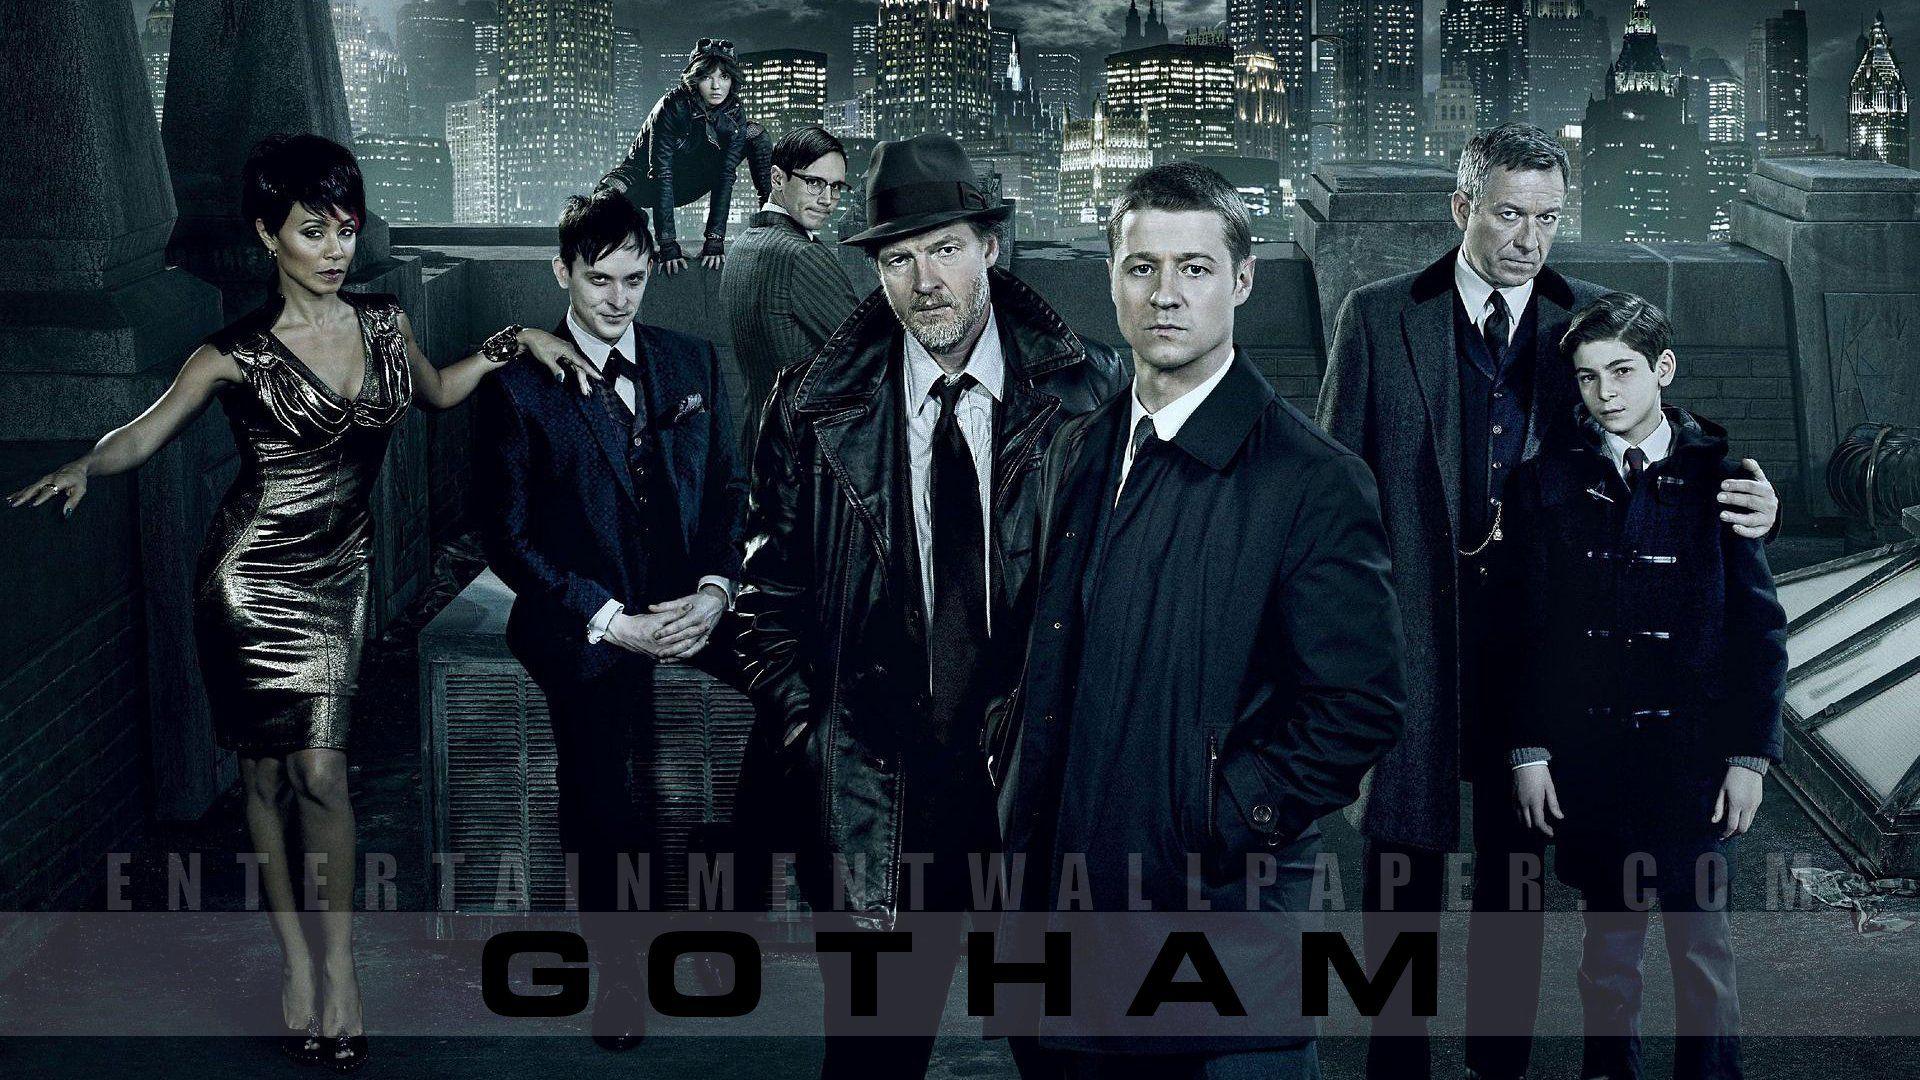 Gotham WallPapers